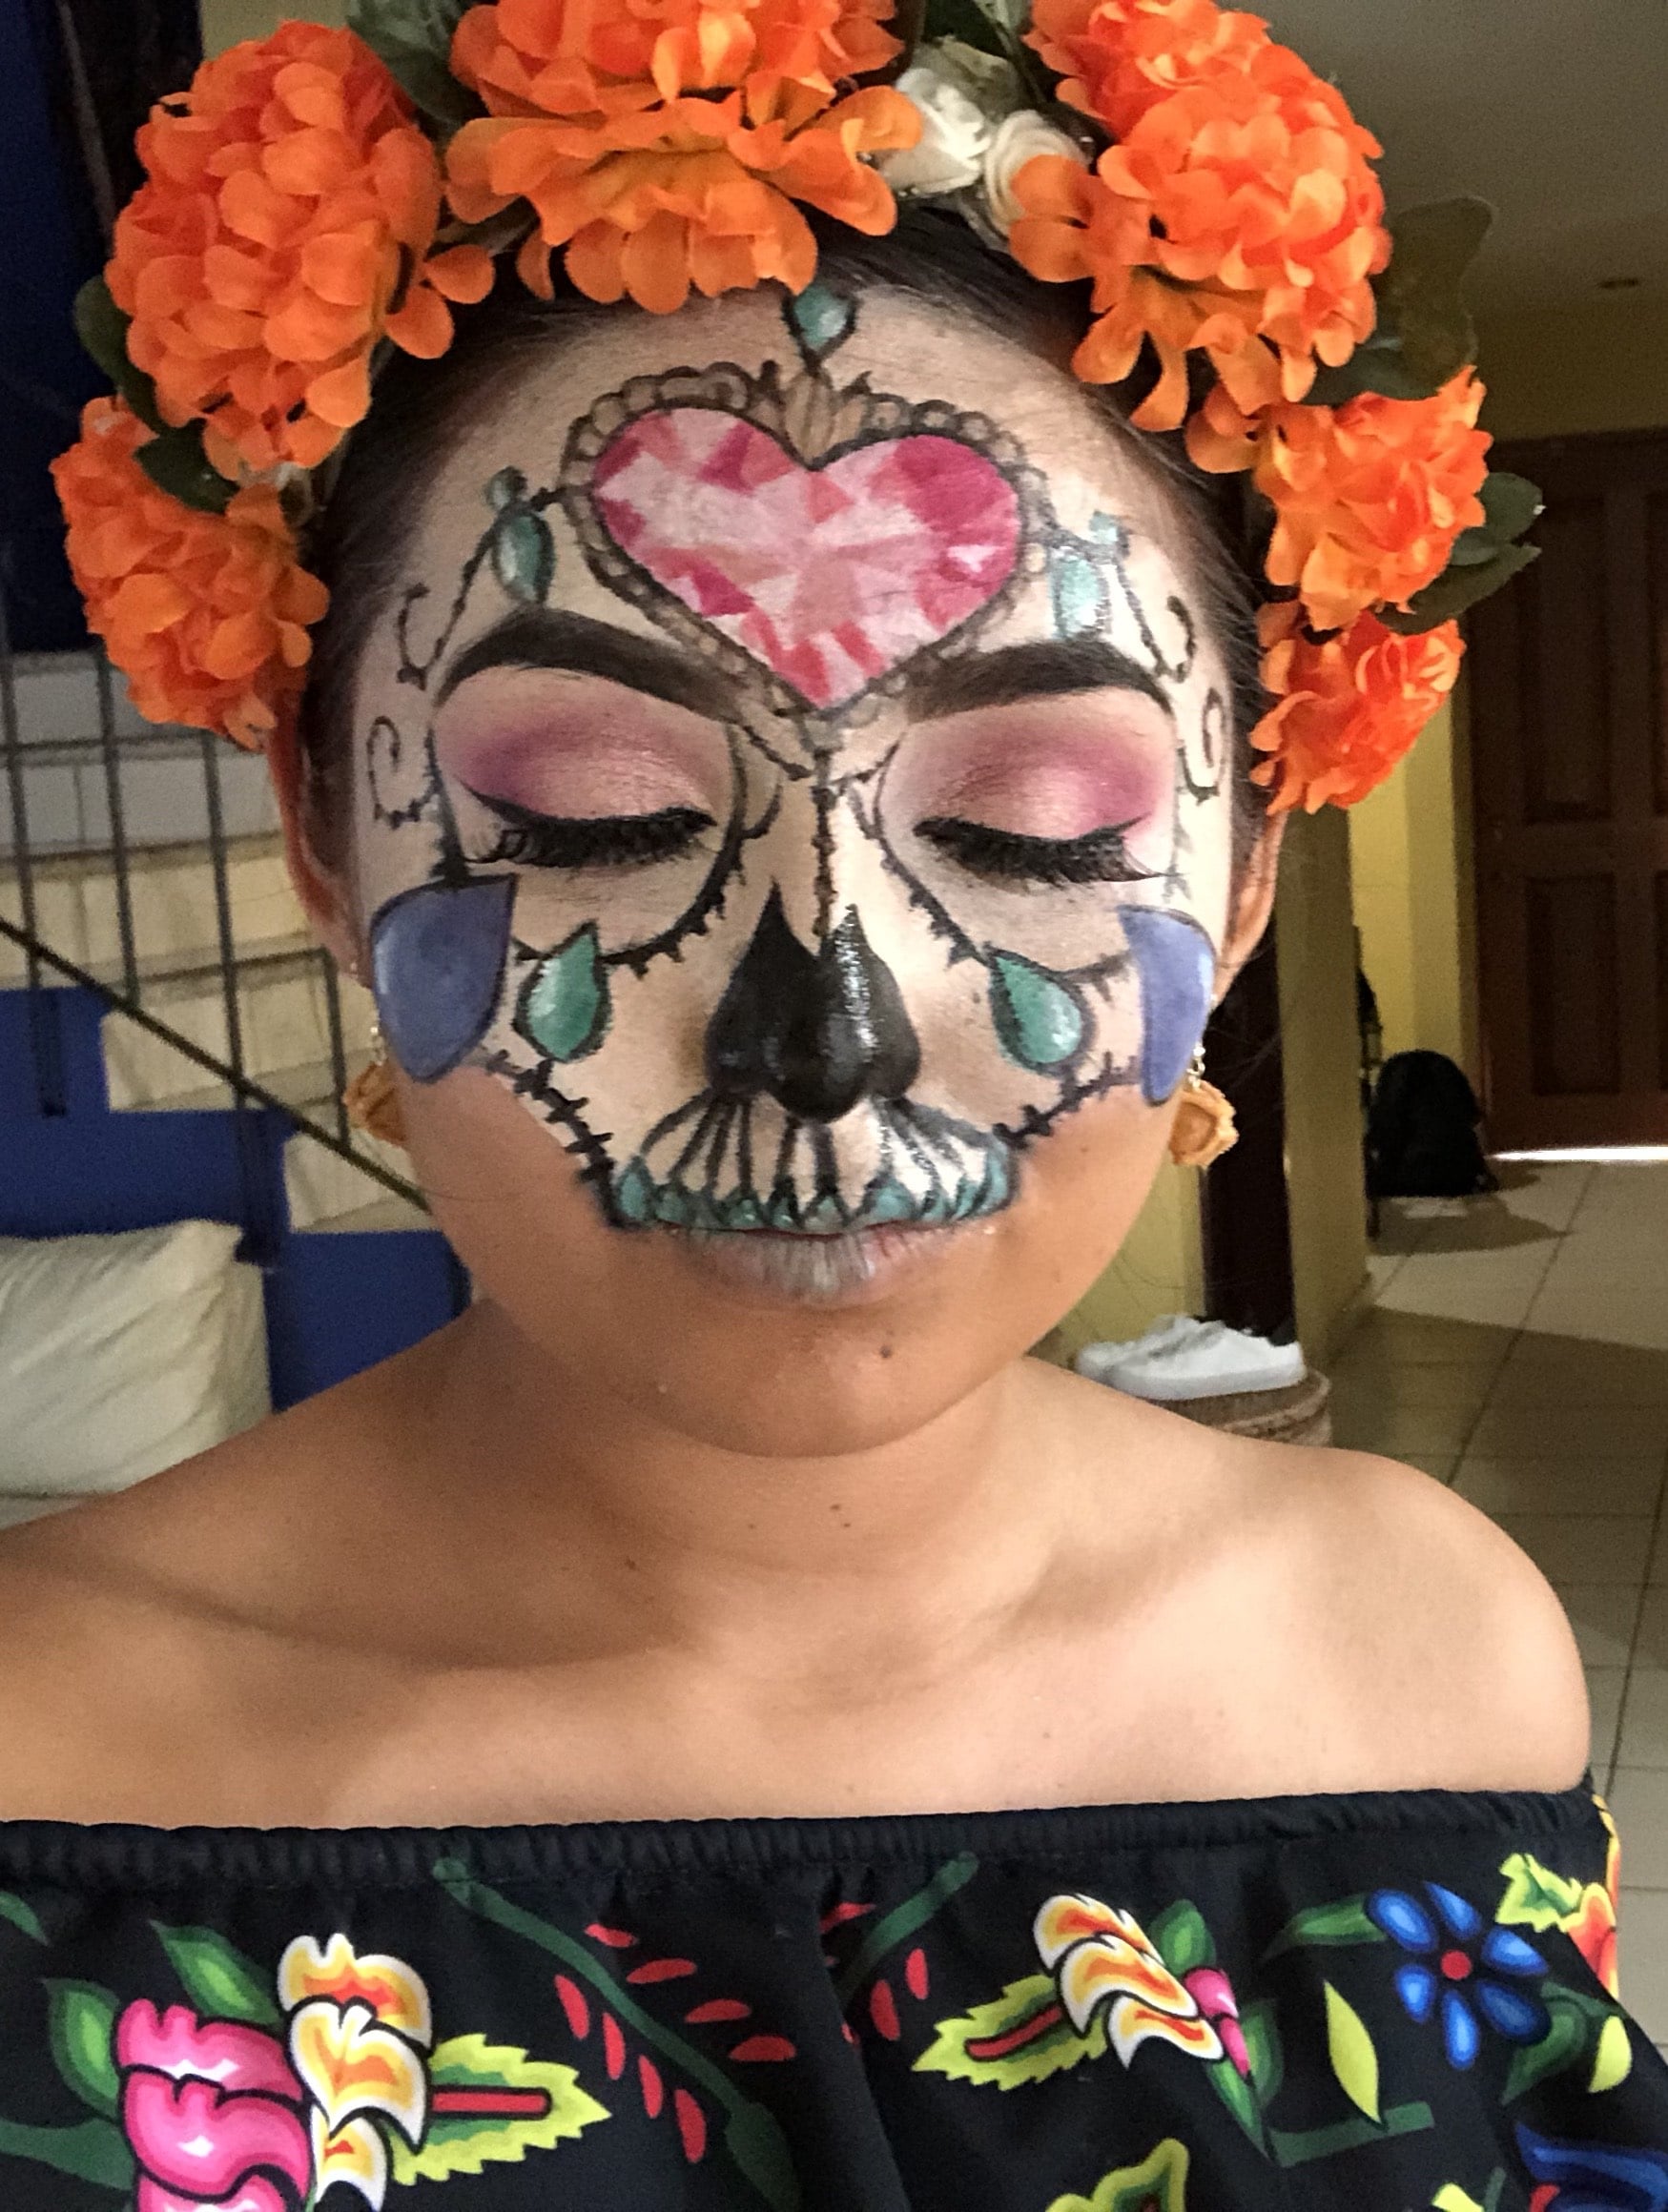 Makeup, Beauty, Hair & Skin | This Mexico-Based Makeup Artist Will Give You Major Día de los Catrina Inspiration | POPSUGAR Beauty Photo 5